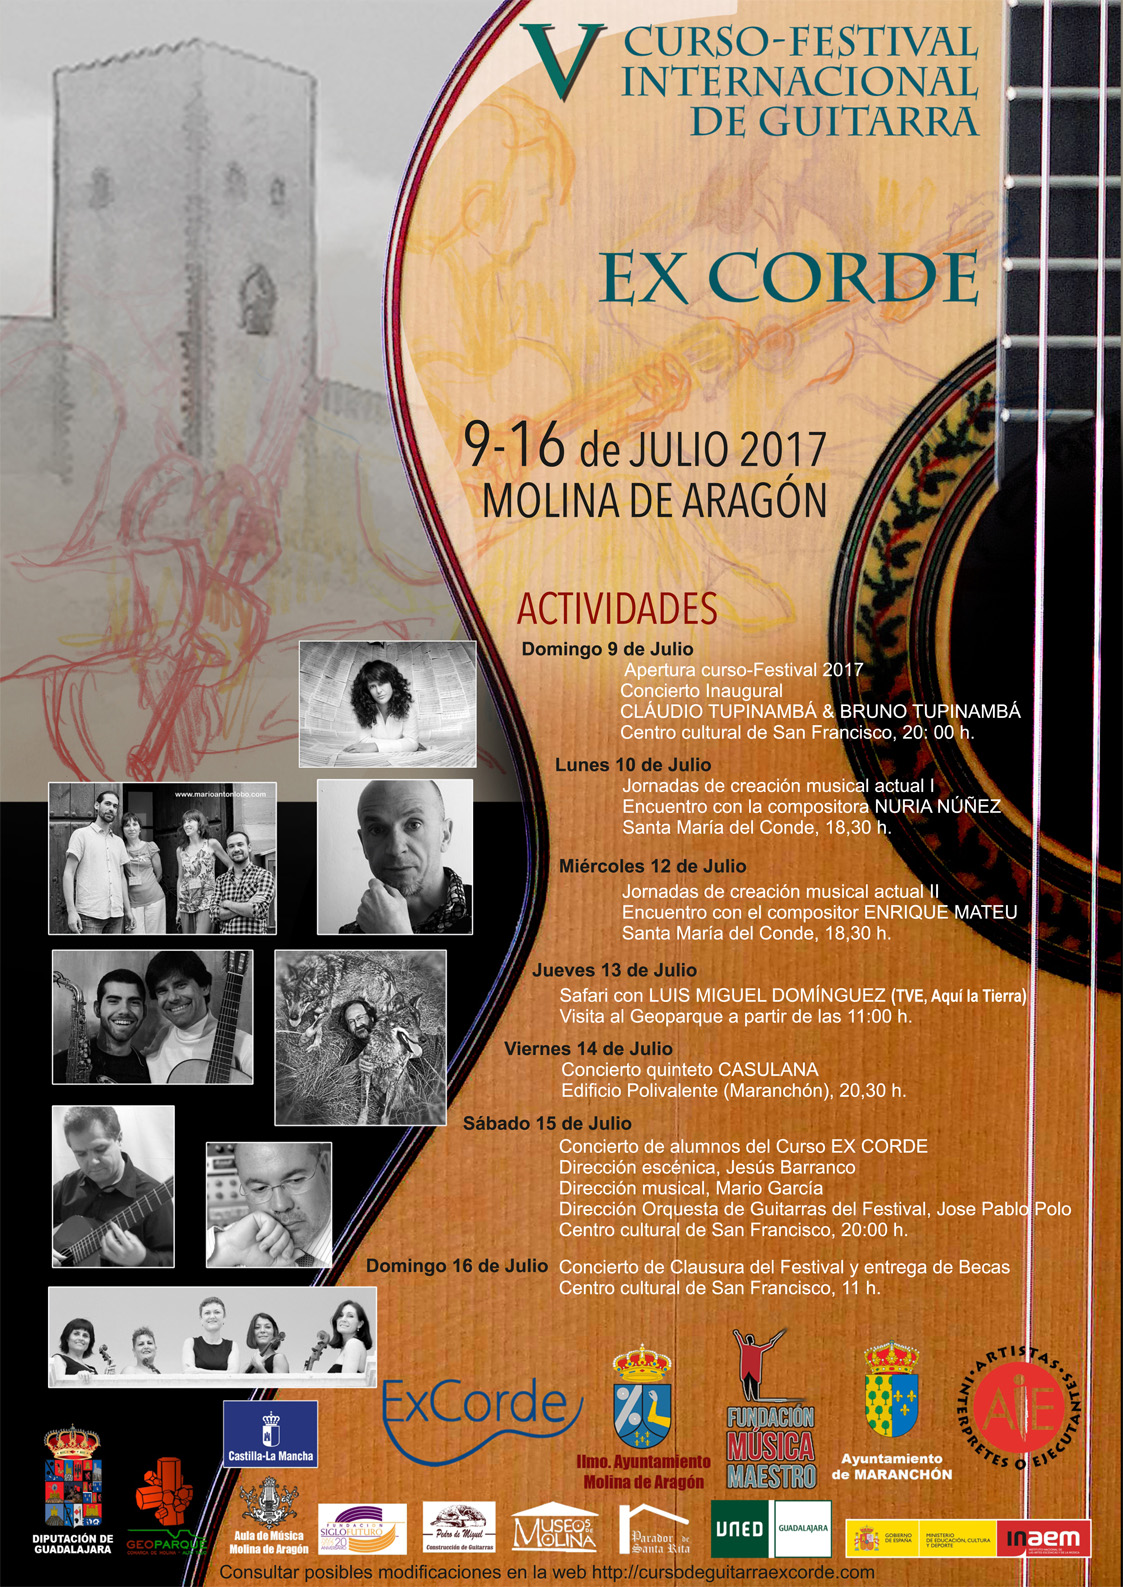 Curso-Festival Internacional de Guitarra Ex Corde